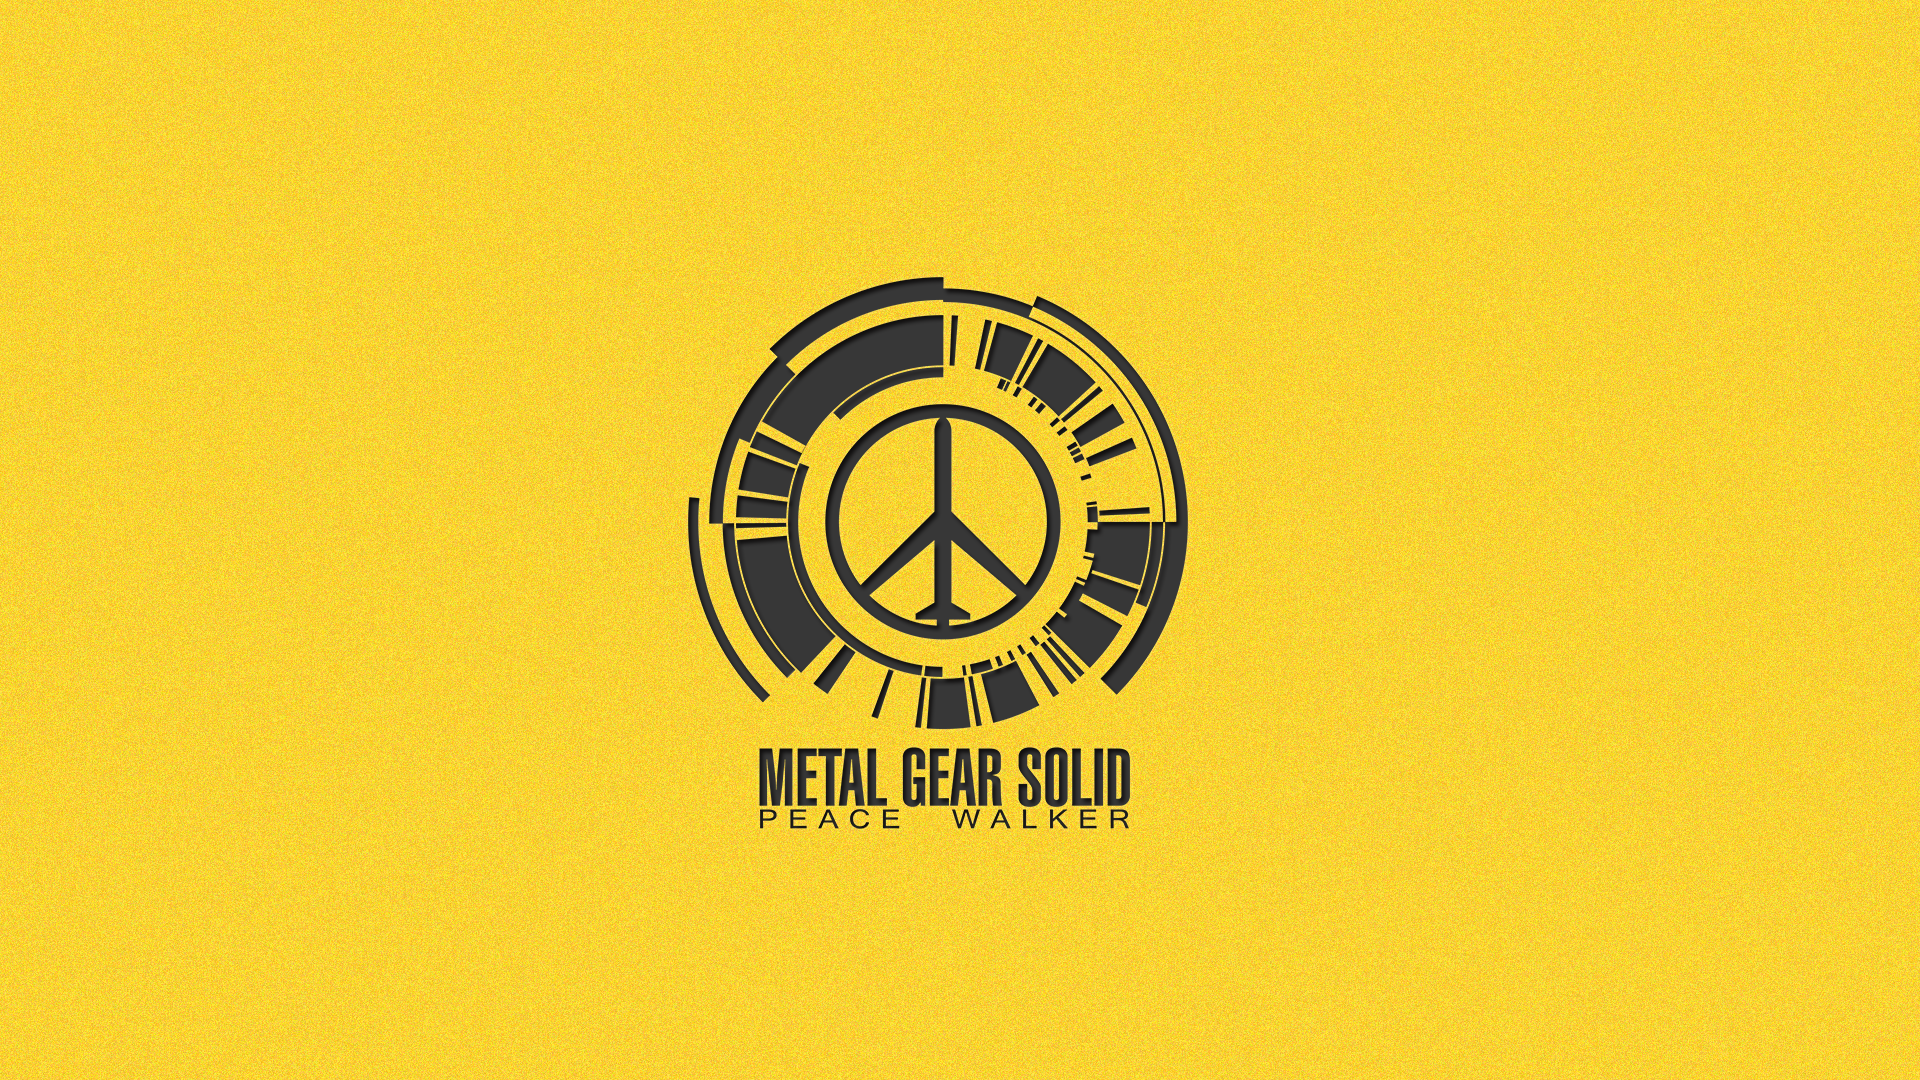 mgs peace walker logo yellow by zero o92 customization wallpaper hdtv